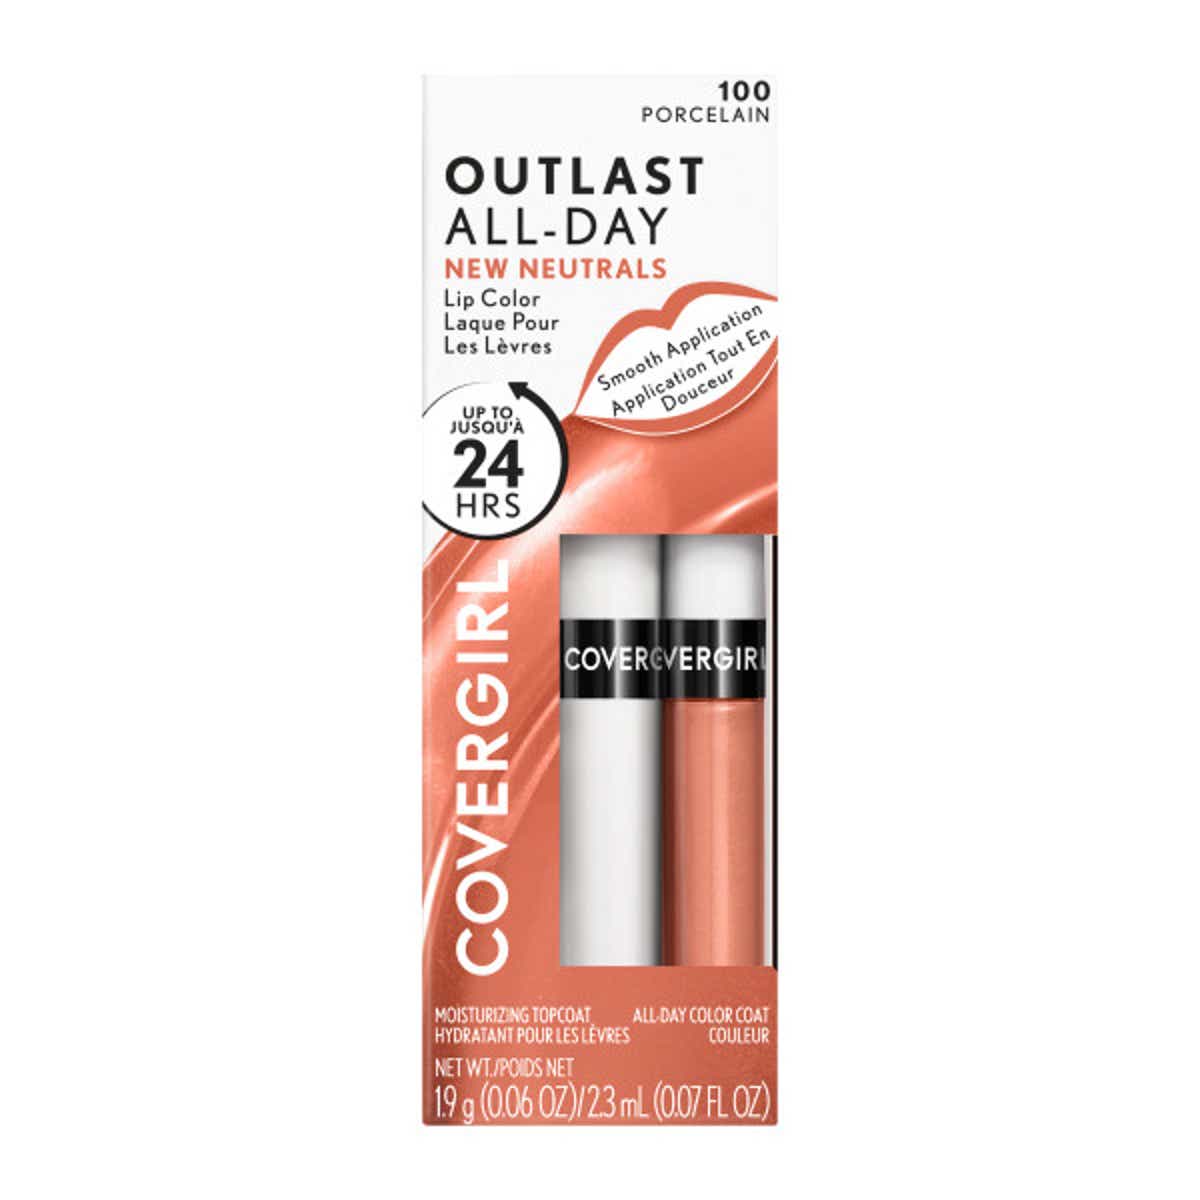 Outlast All-Day New Neutrals Lip Colour